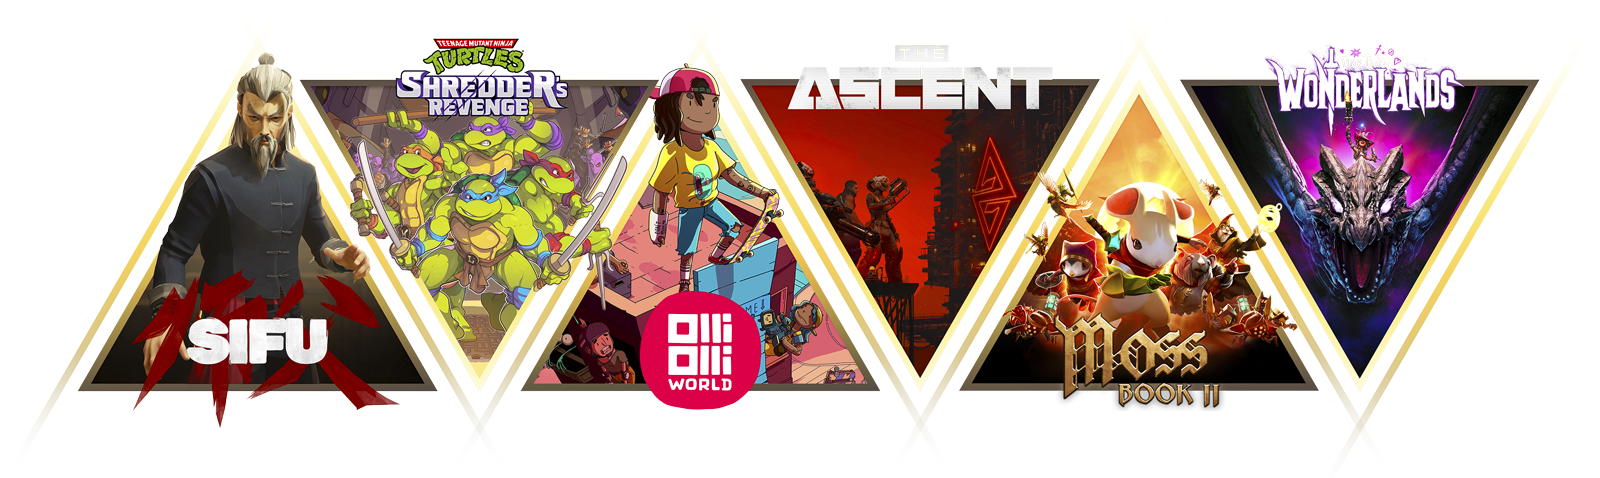 صورة جماعية لأبطال ألعاب Sifu و Teenage Mutant Ninja Turtles:‎ Shredder's Revenge و OlliOlli World و The Ascent و Moss:‎ Book II و Tiny Tina's Wonderlands.